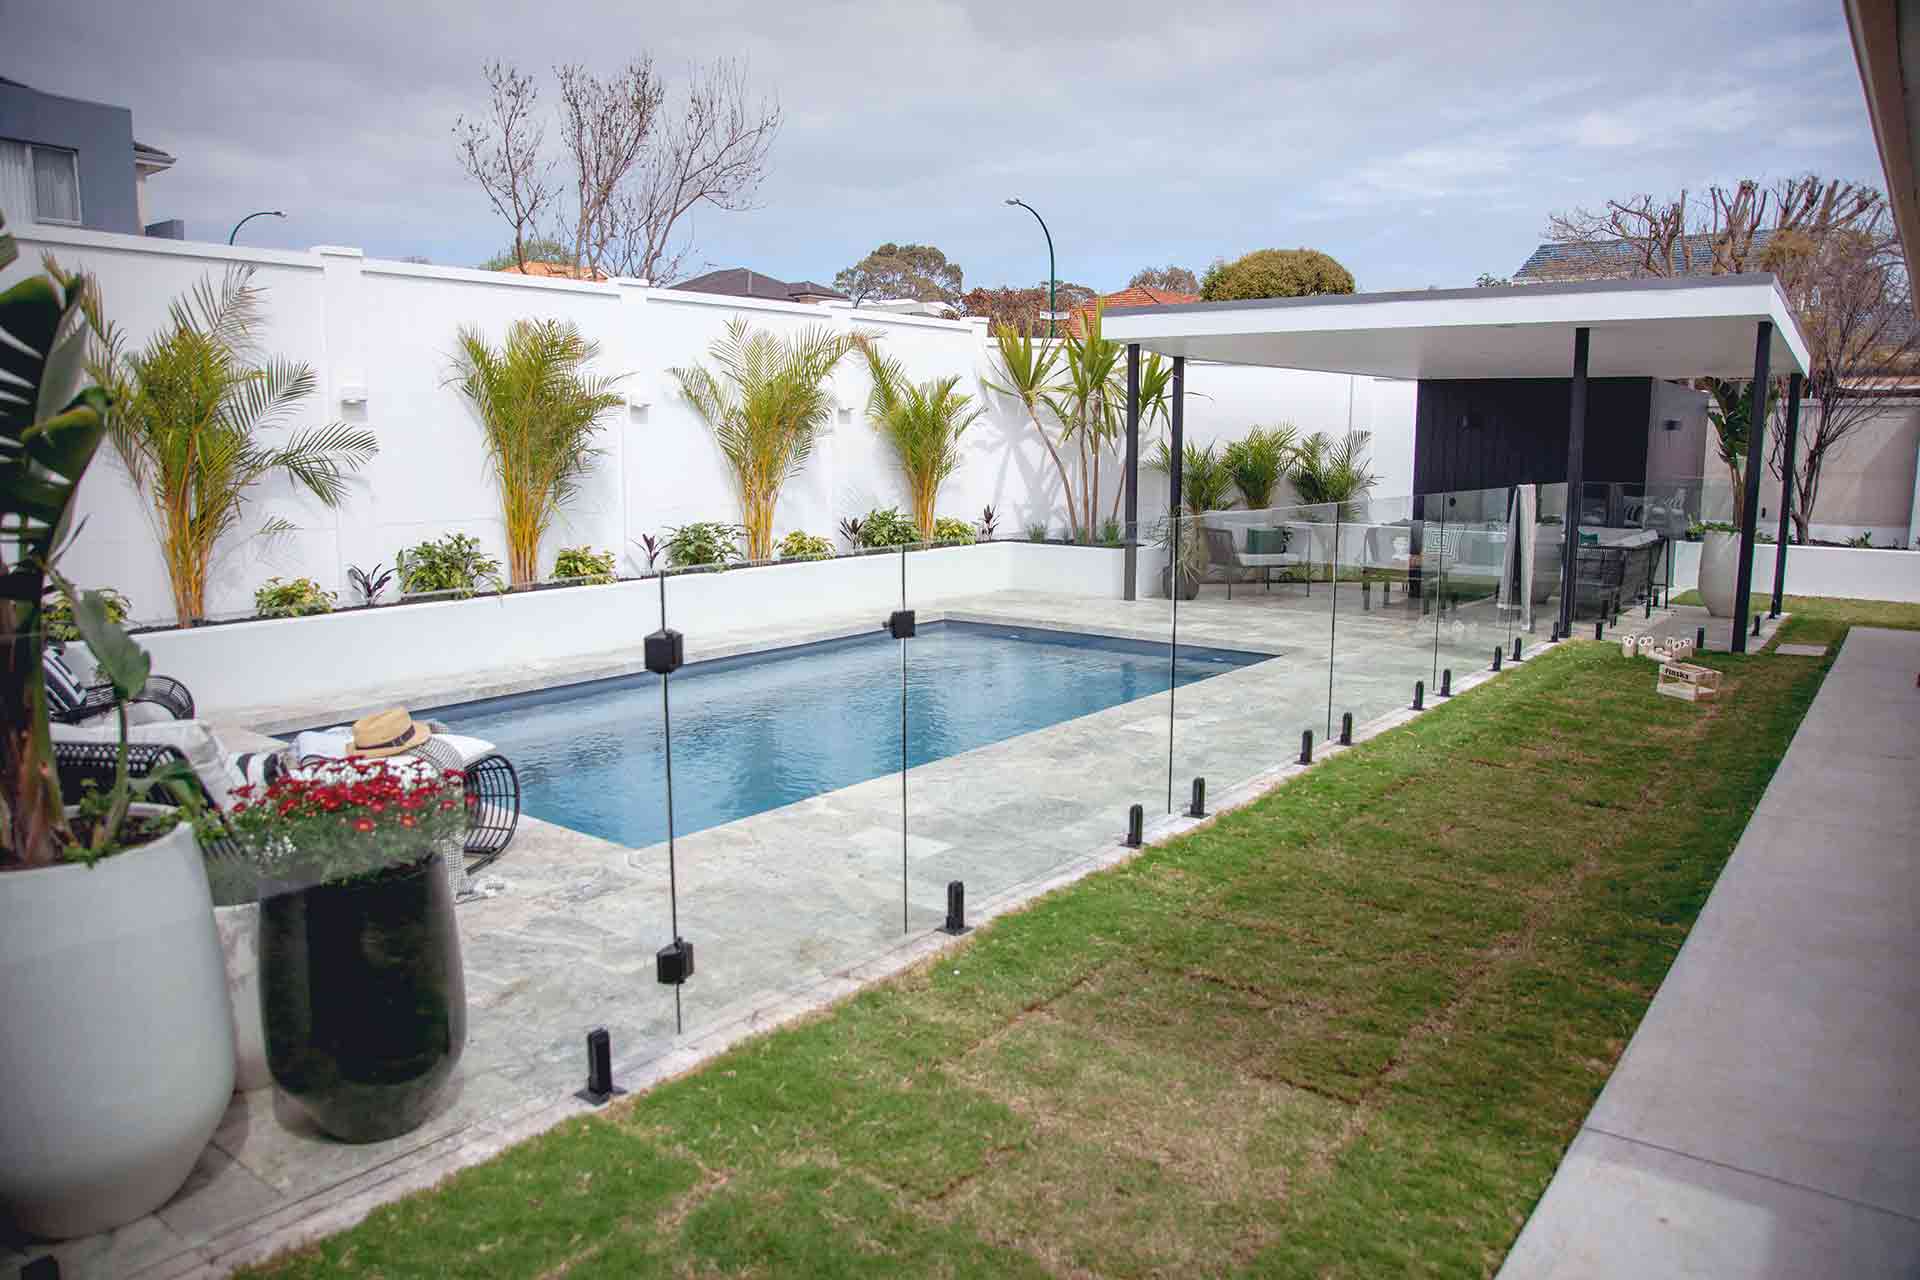 Affordable Backyard Pool Design Ideas - Factory Pools Perth